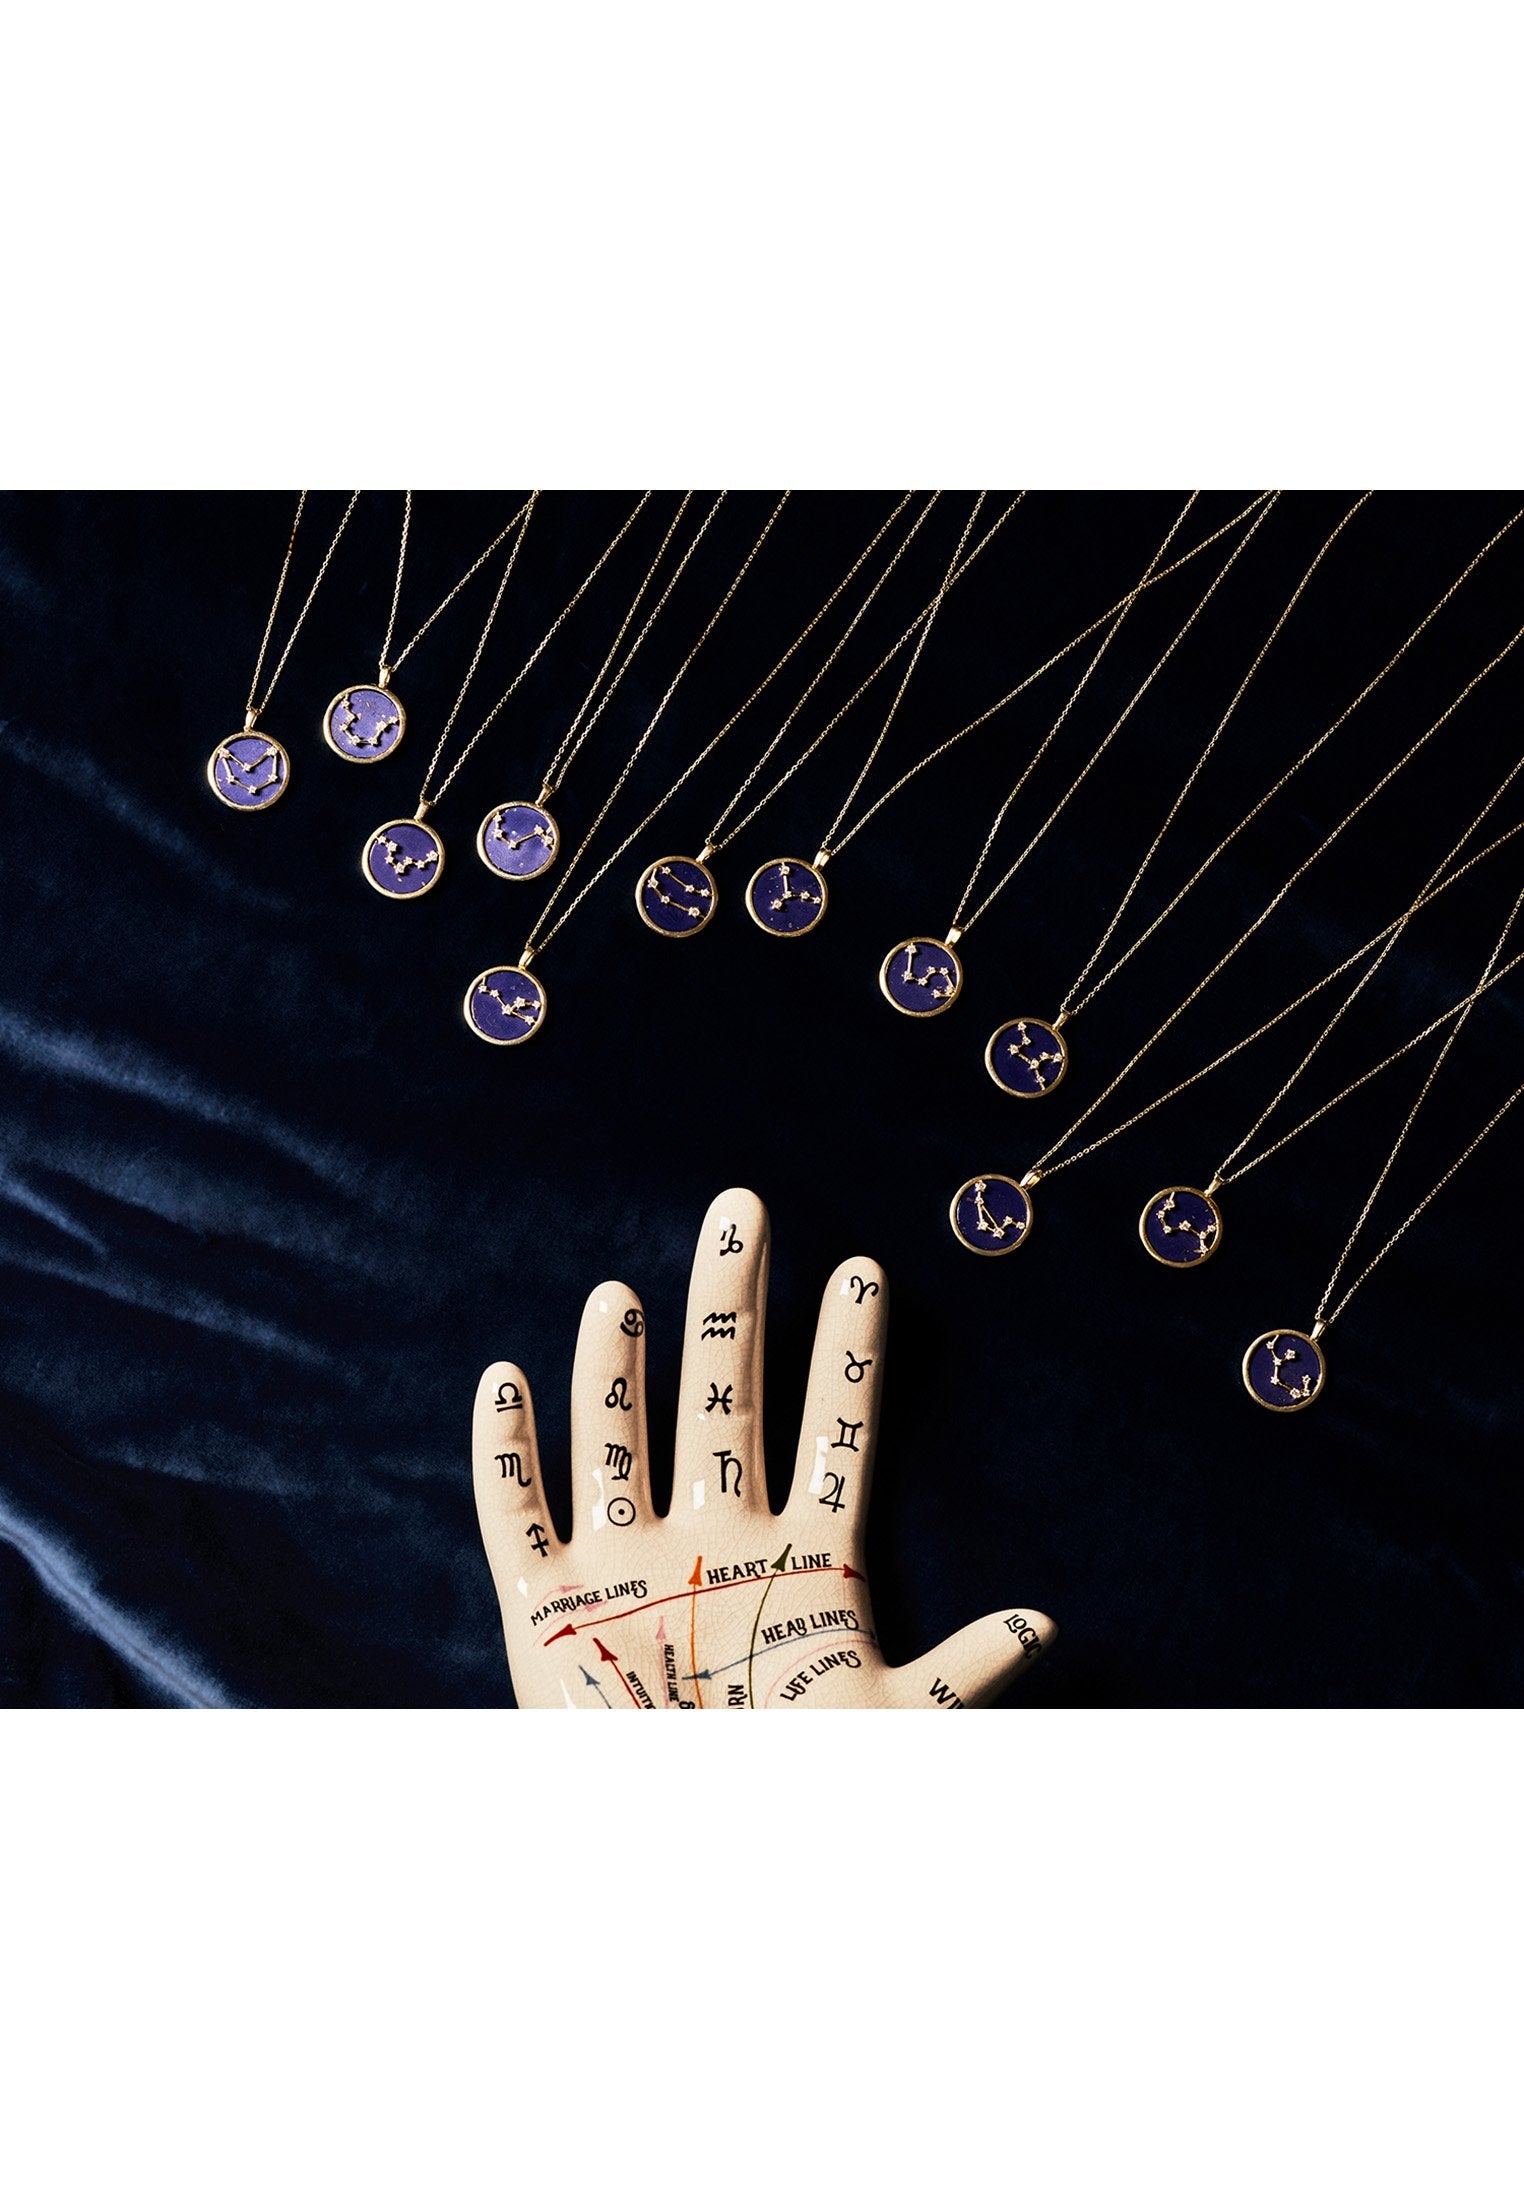 Personalized Necklaces - Zodiac Lapis Lazuli Star Constellation Pendant Necklace Gold Scorpio 